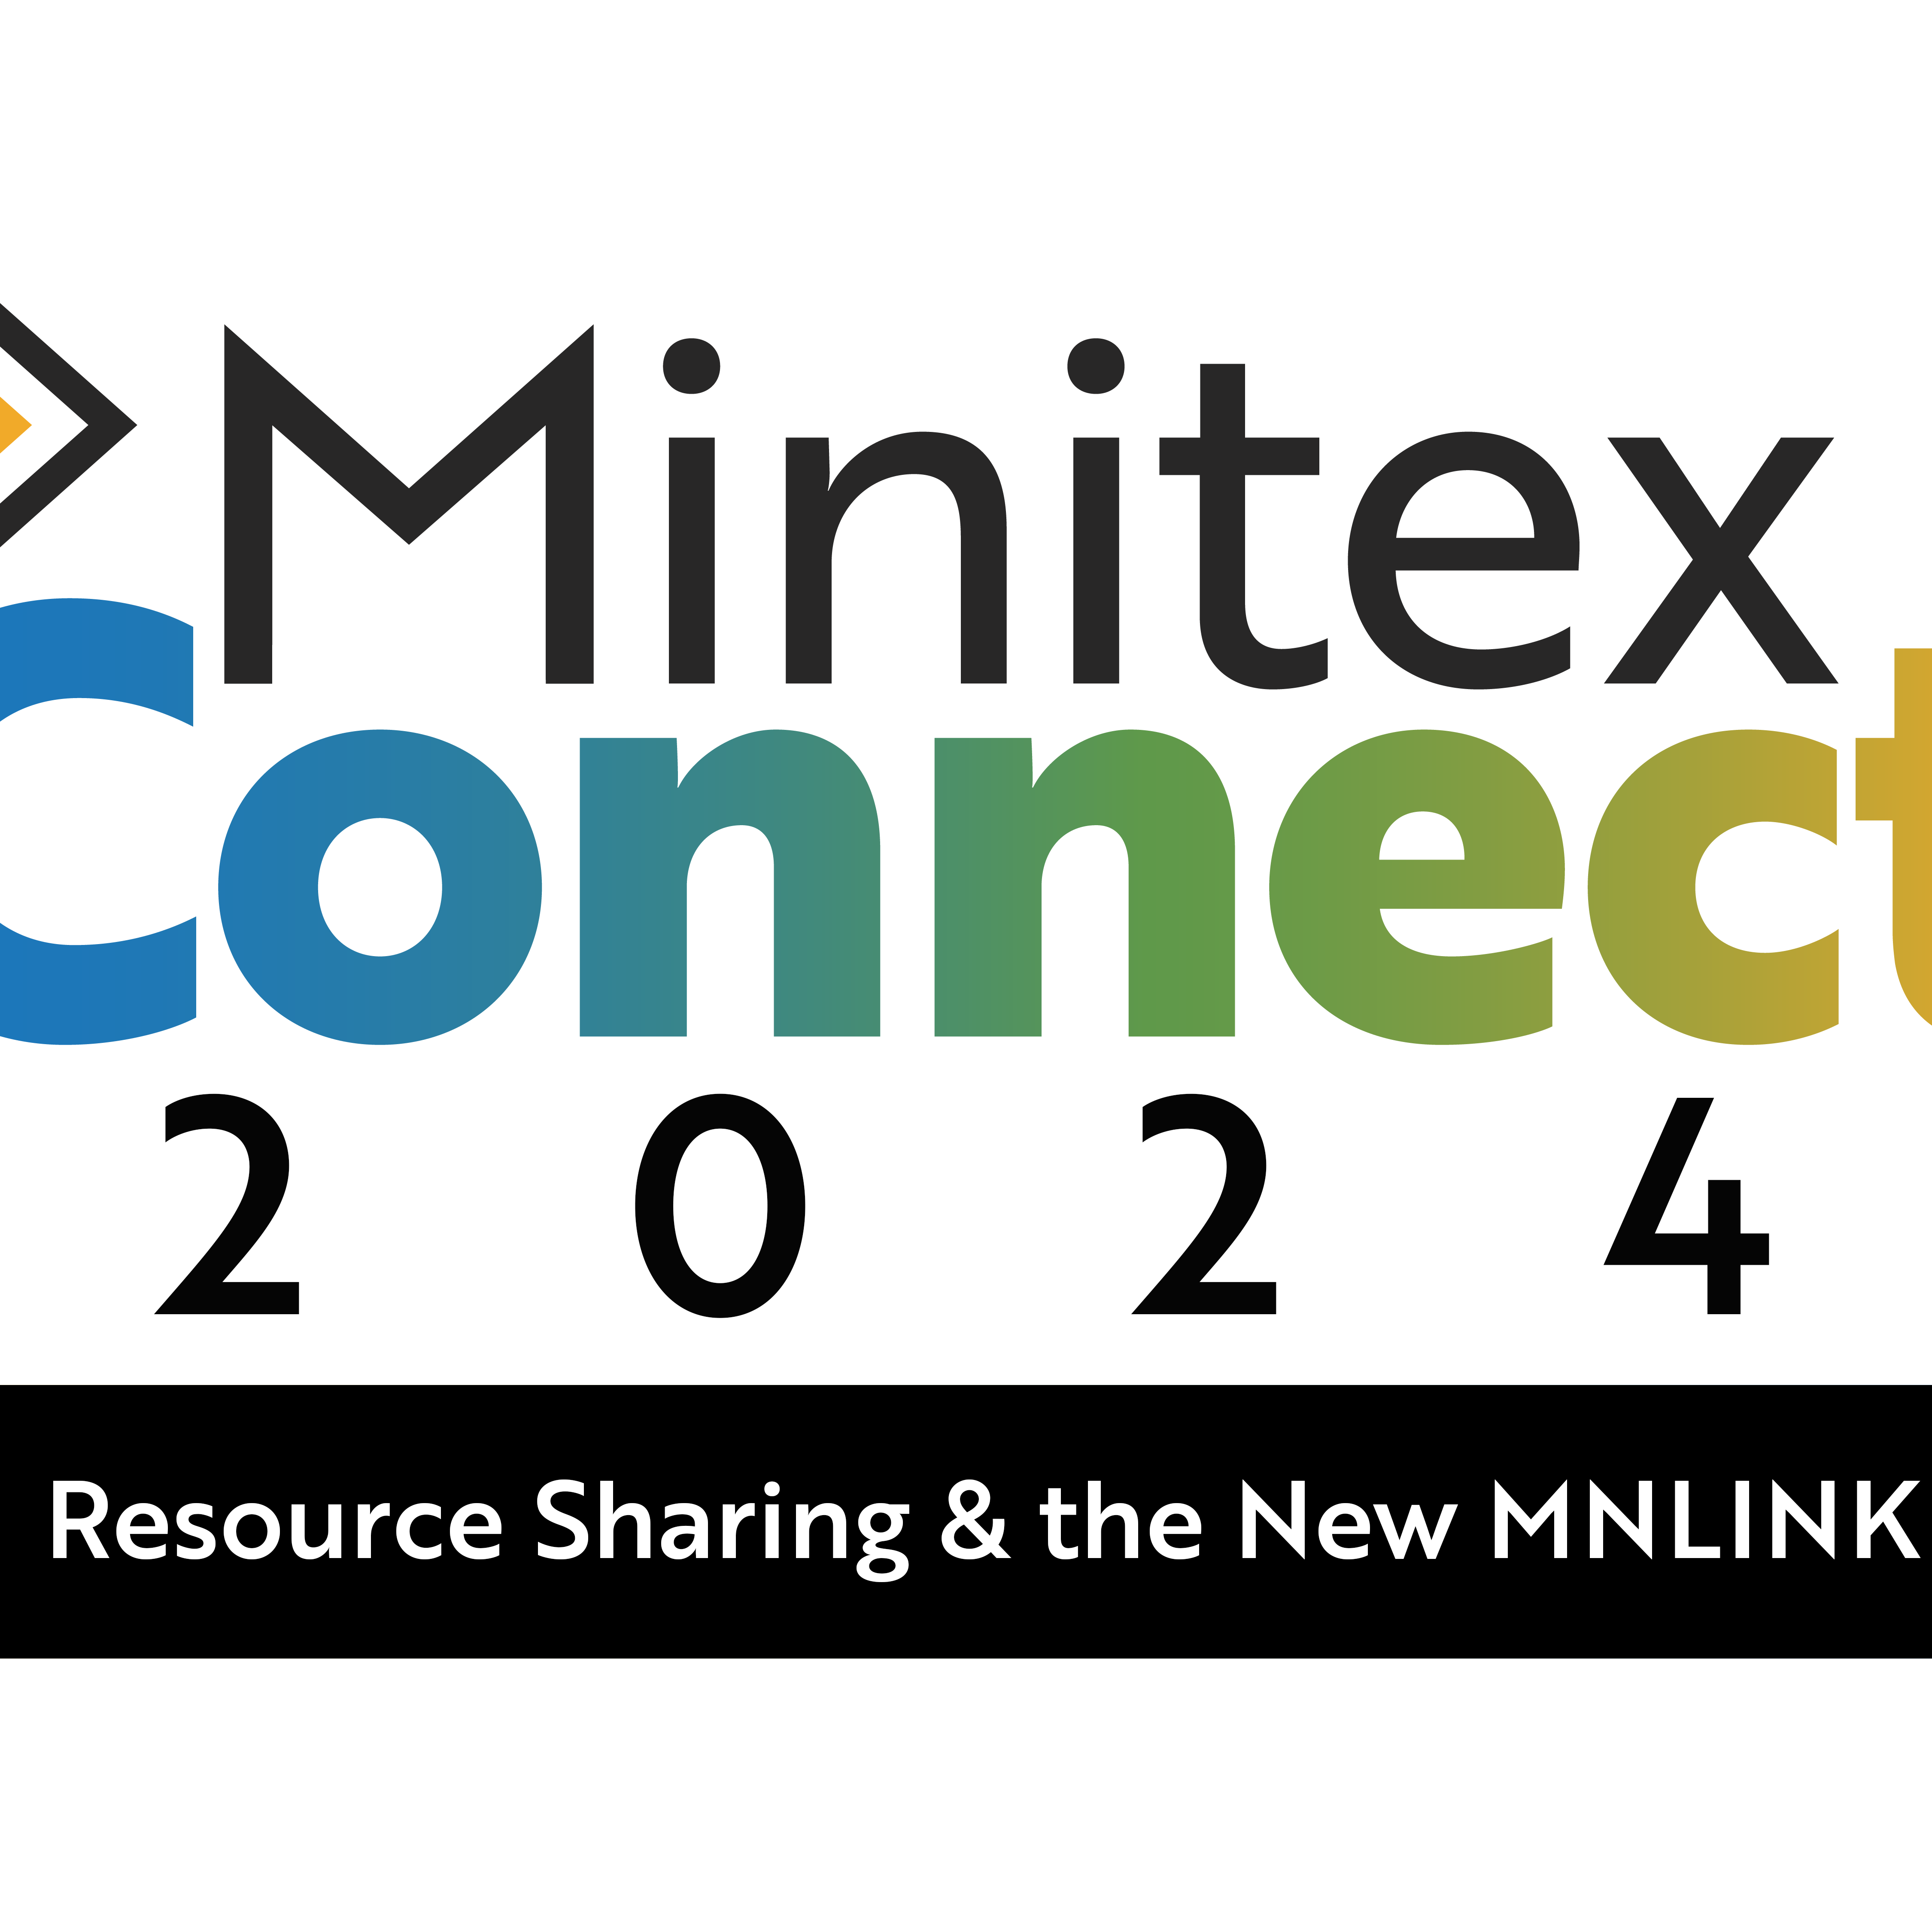 Minitex Connect 2024